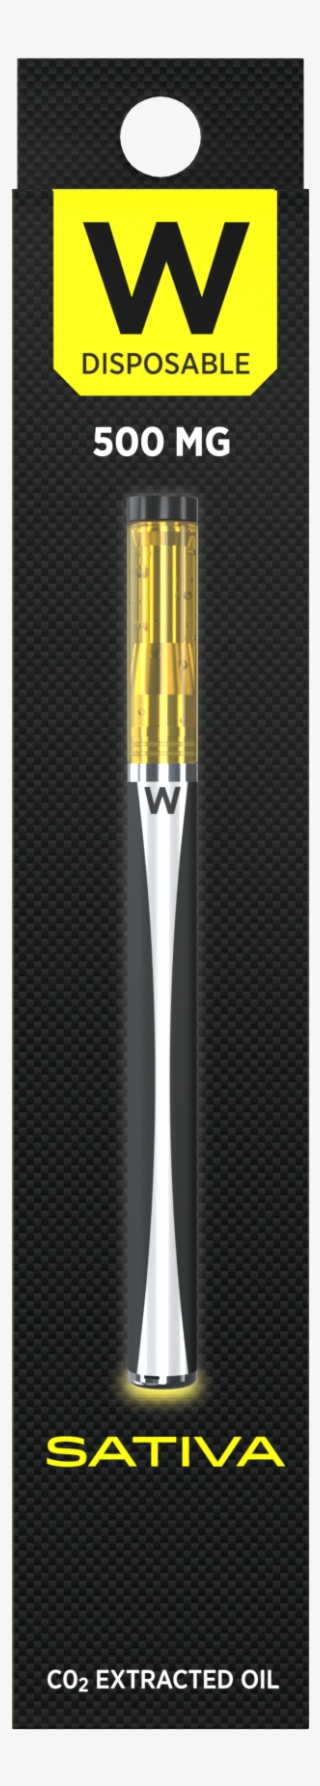 Durban Poison Sativa 500mg Vape Pen By W Vapes - Ball Pen